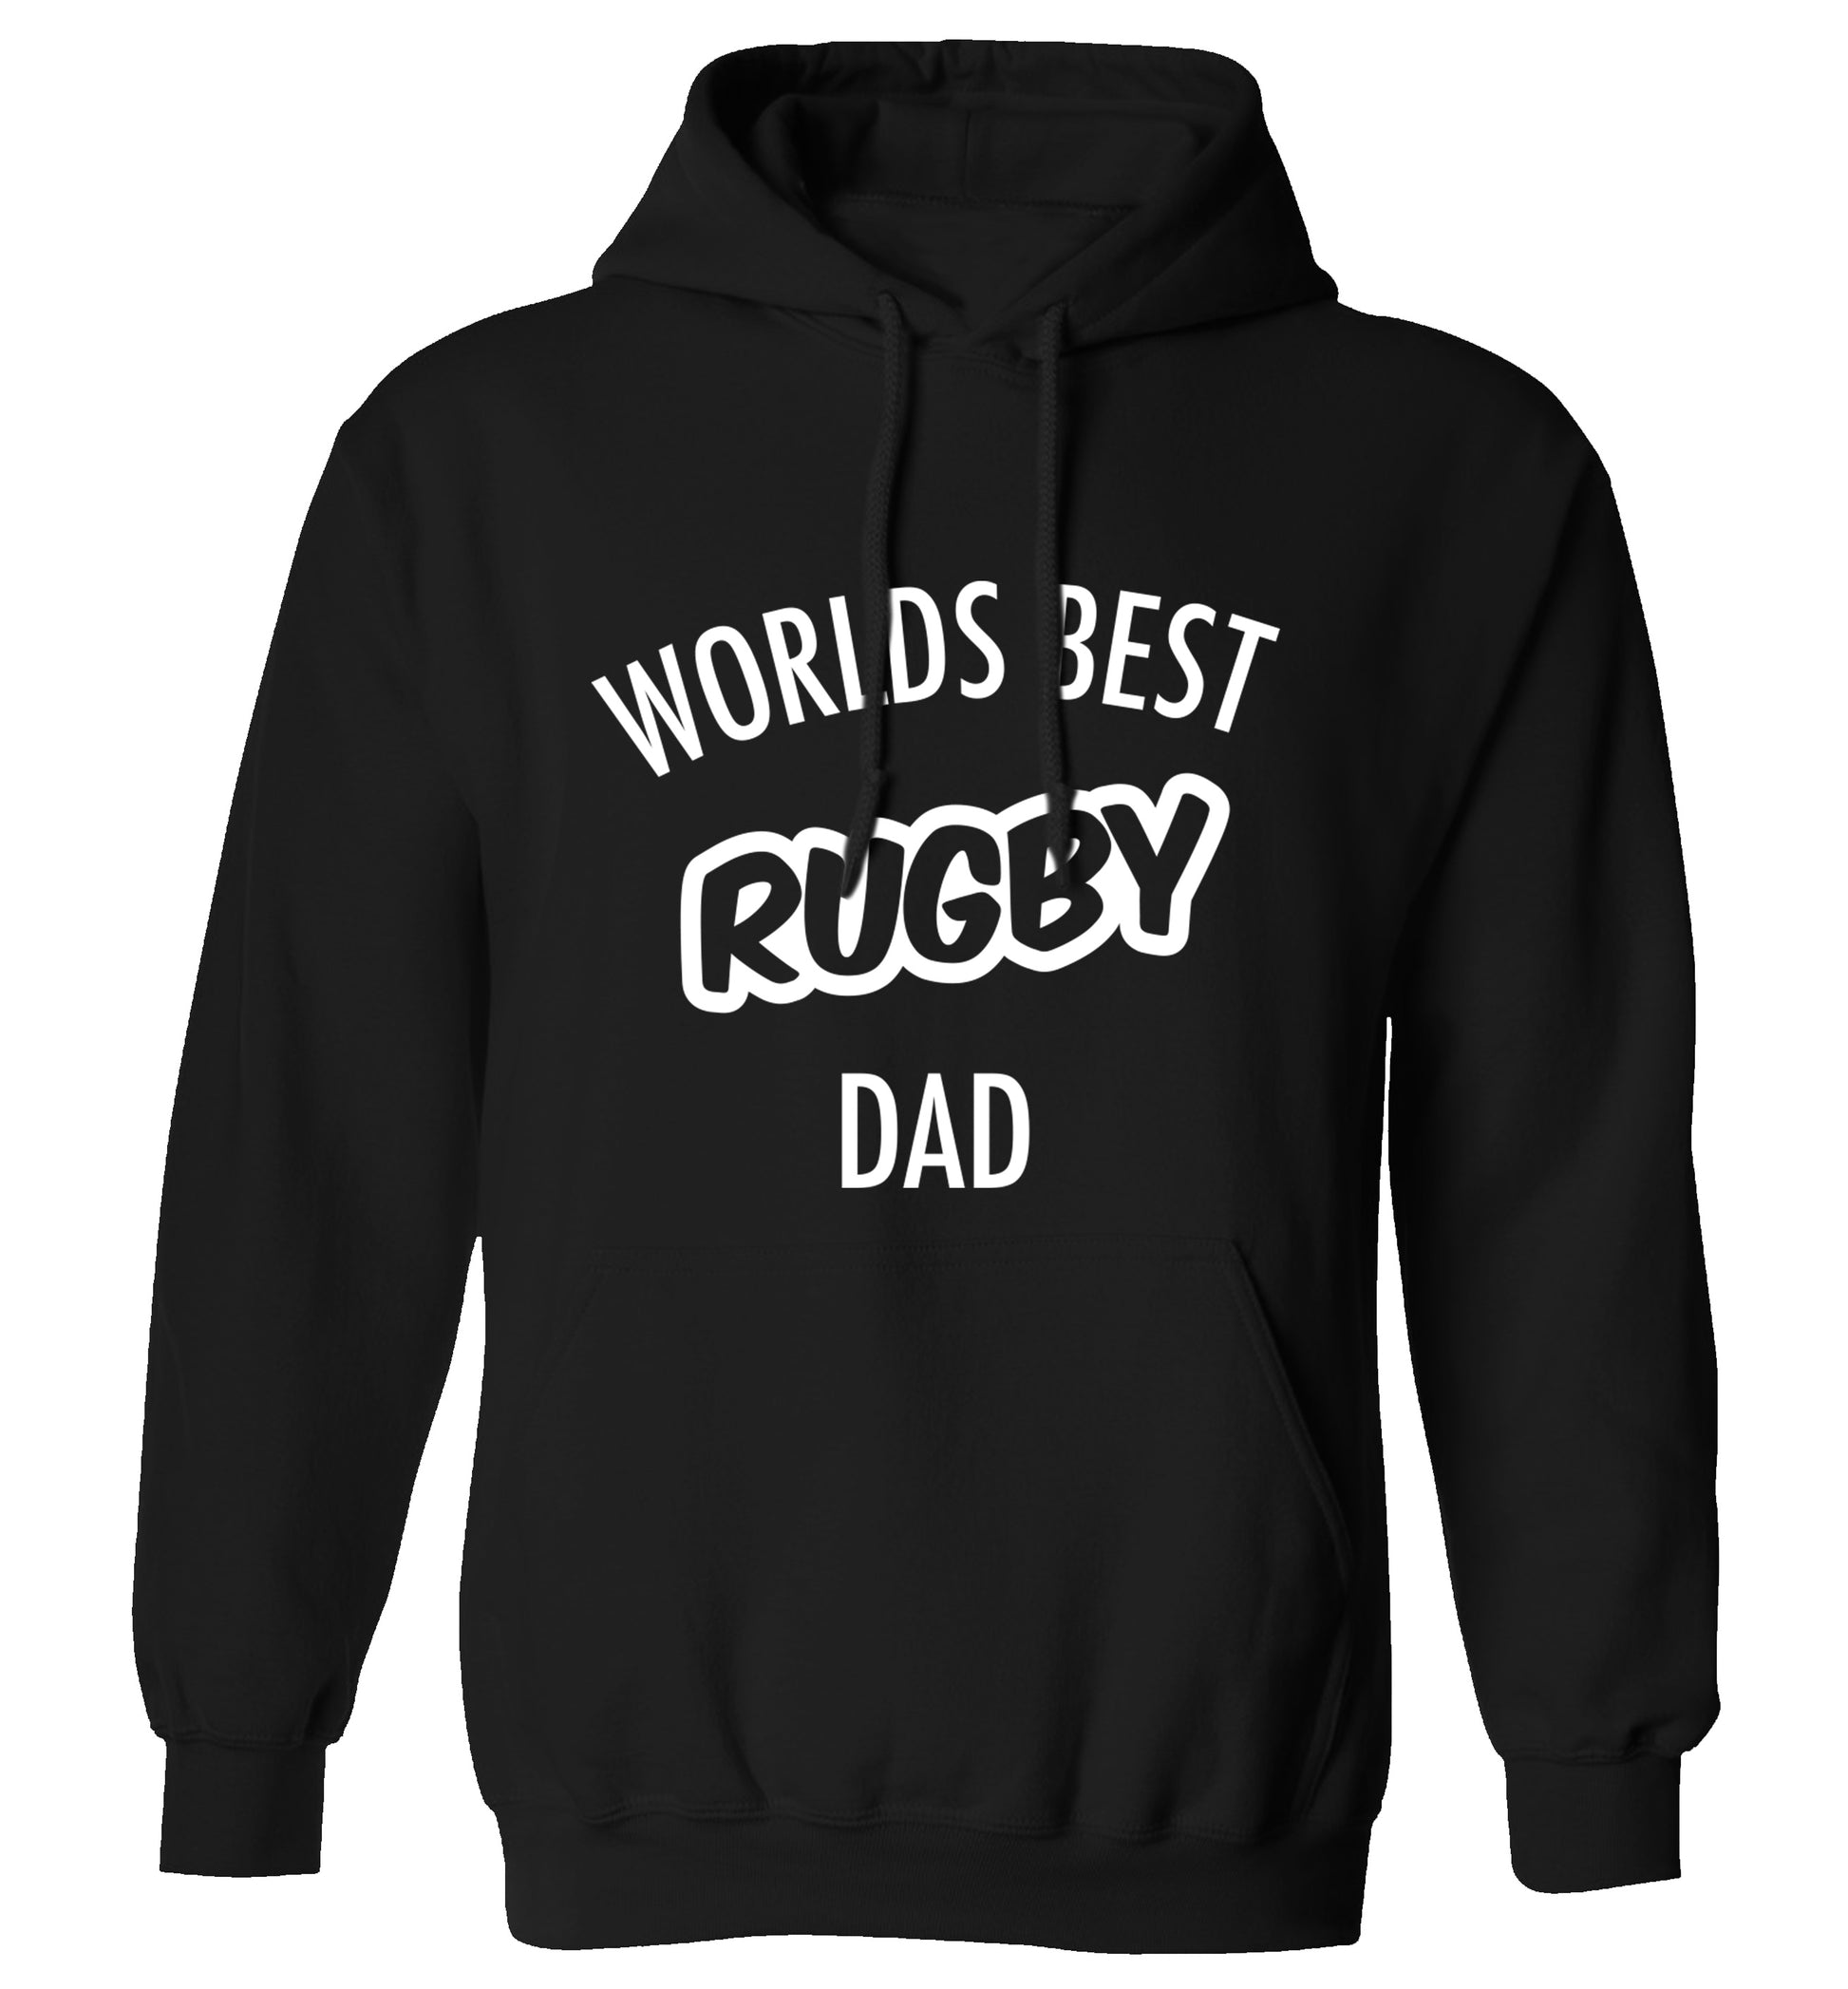 Worlds best rugby dad adults unisex black hoodie 2XL